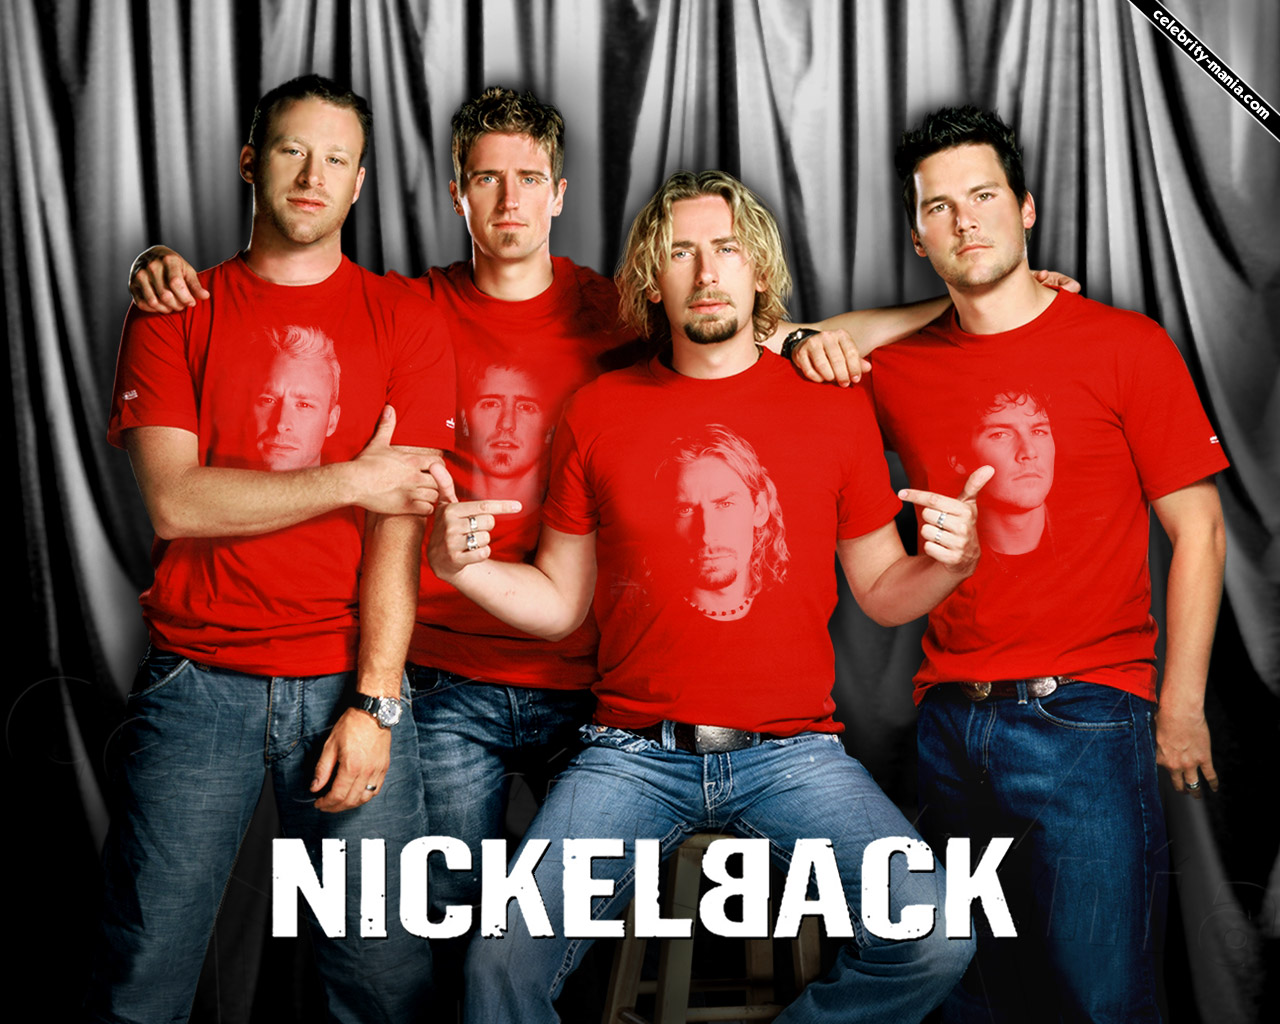 Nickelback - Nickelback Wallpaper (25842858) - Fanpop